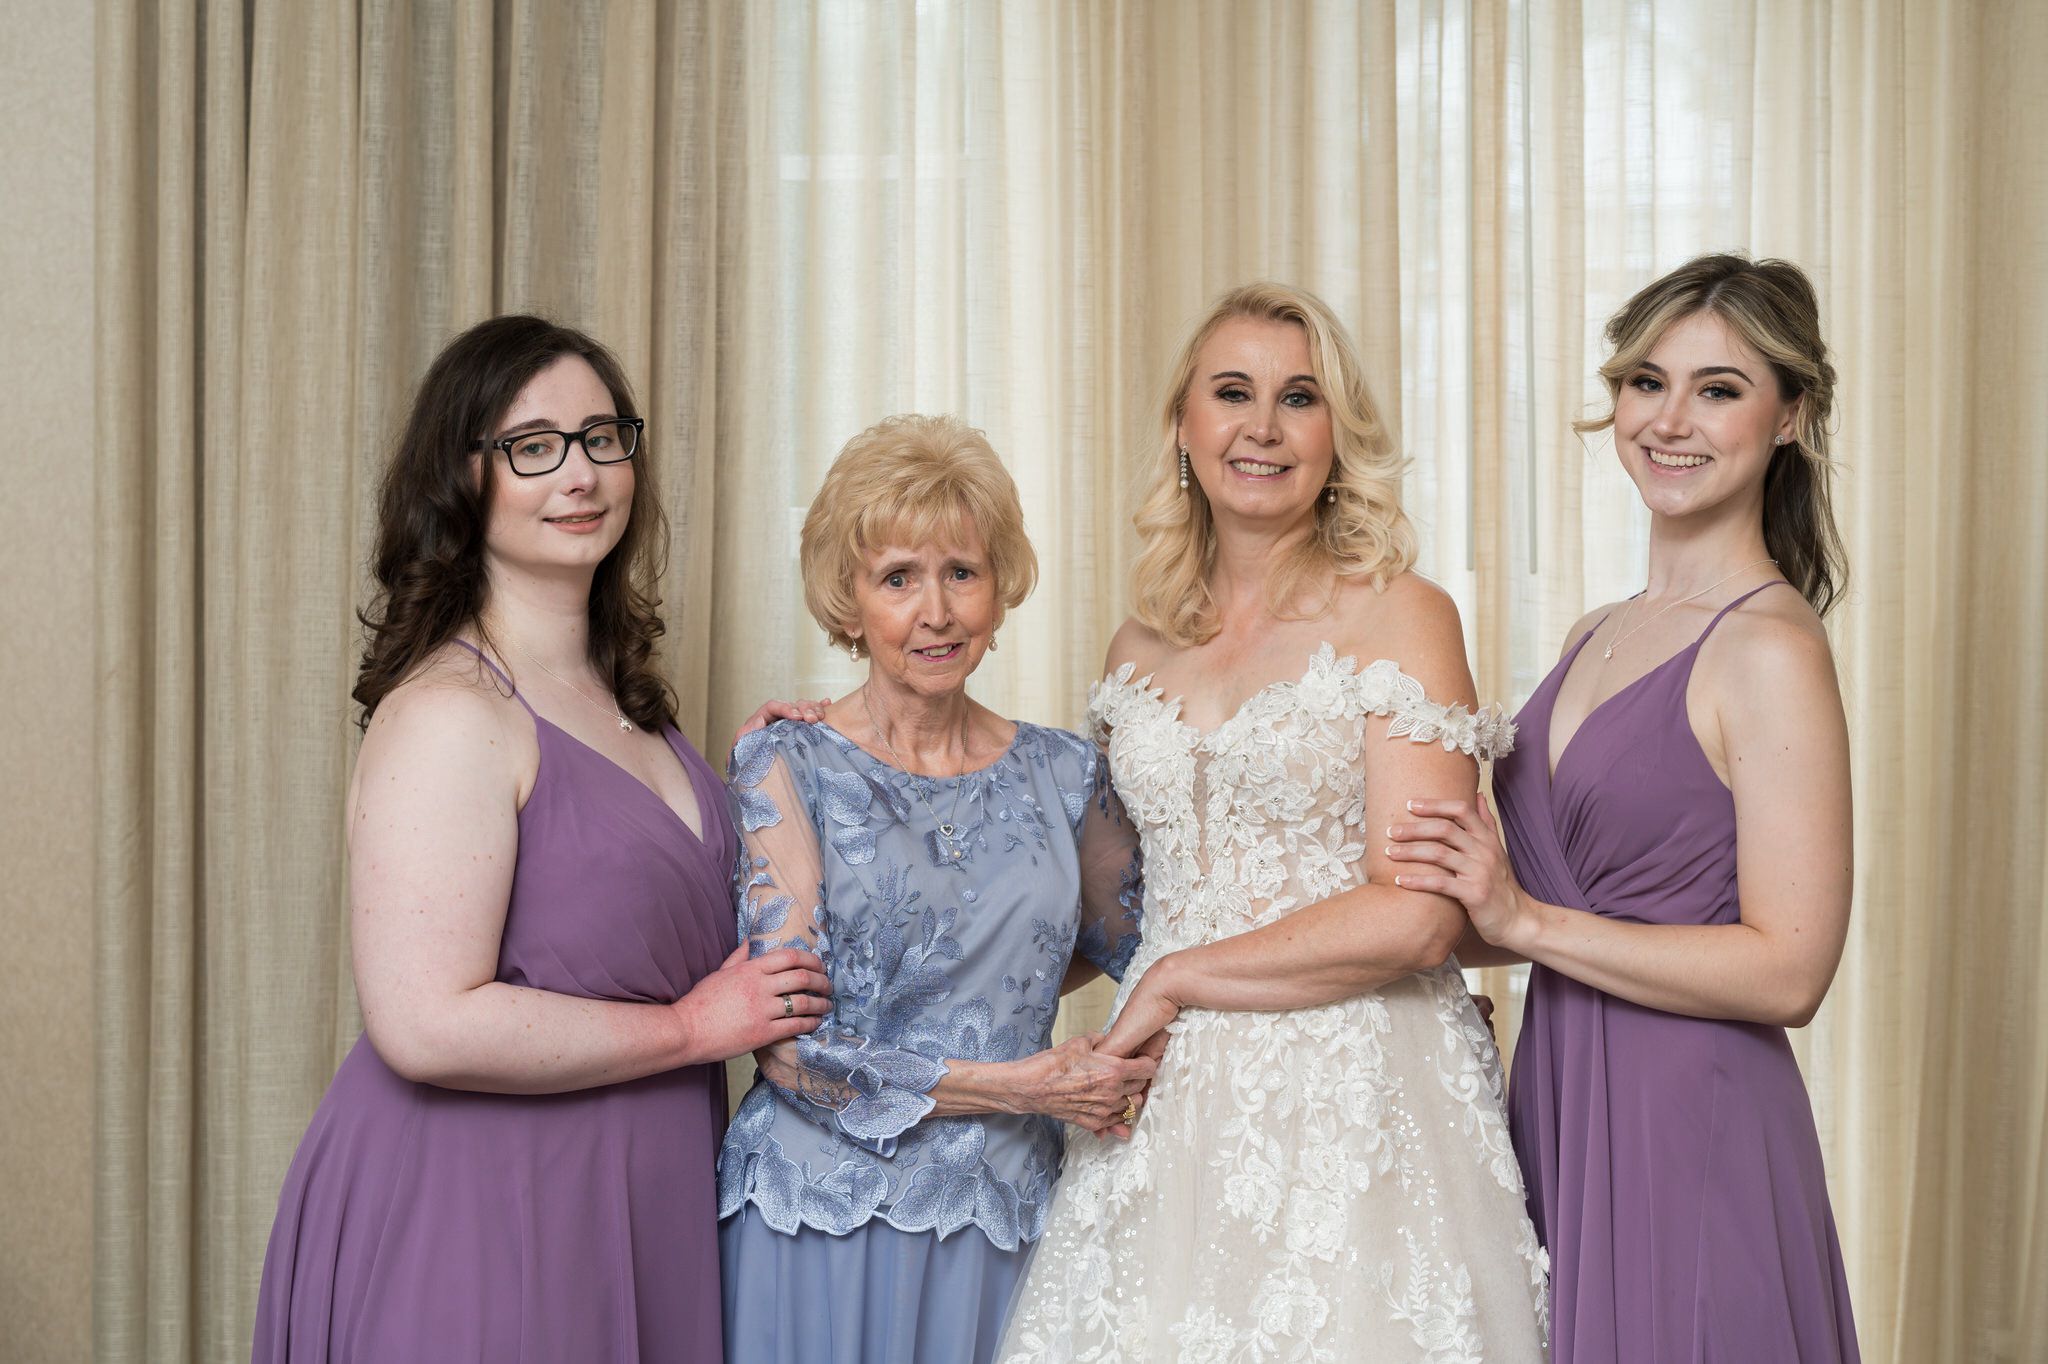 Three generations of women on a wedding day. 